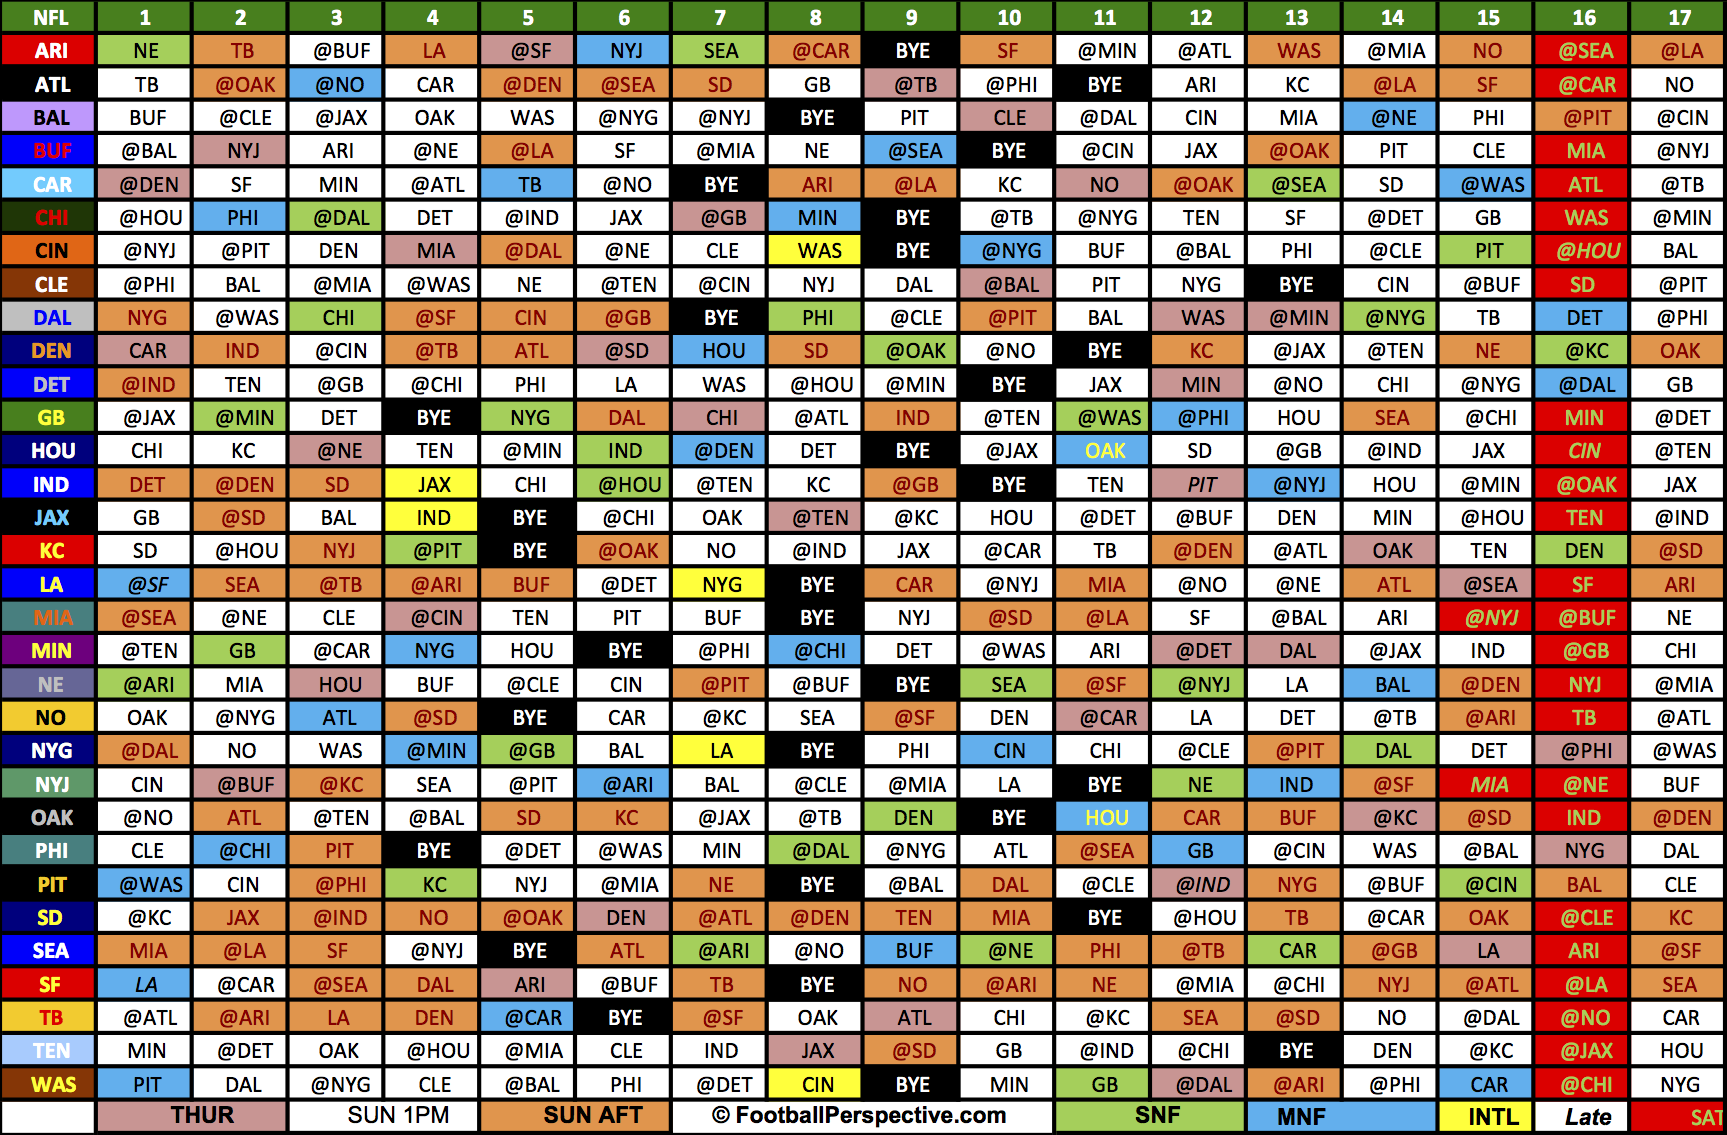 The 2016 NFL Schedule